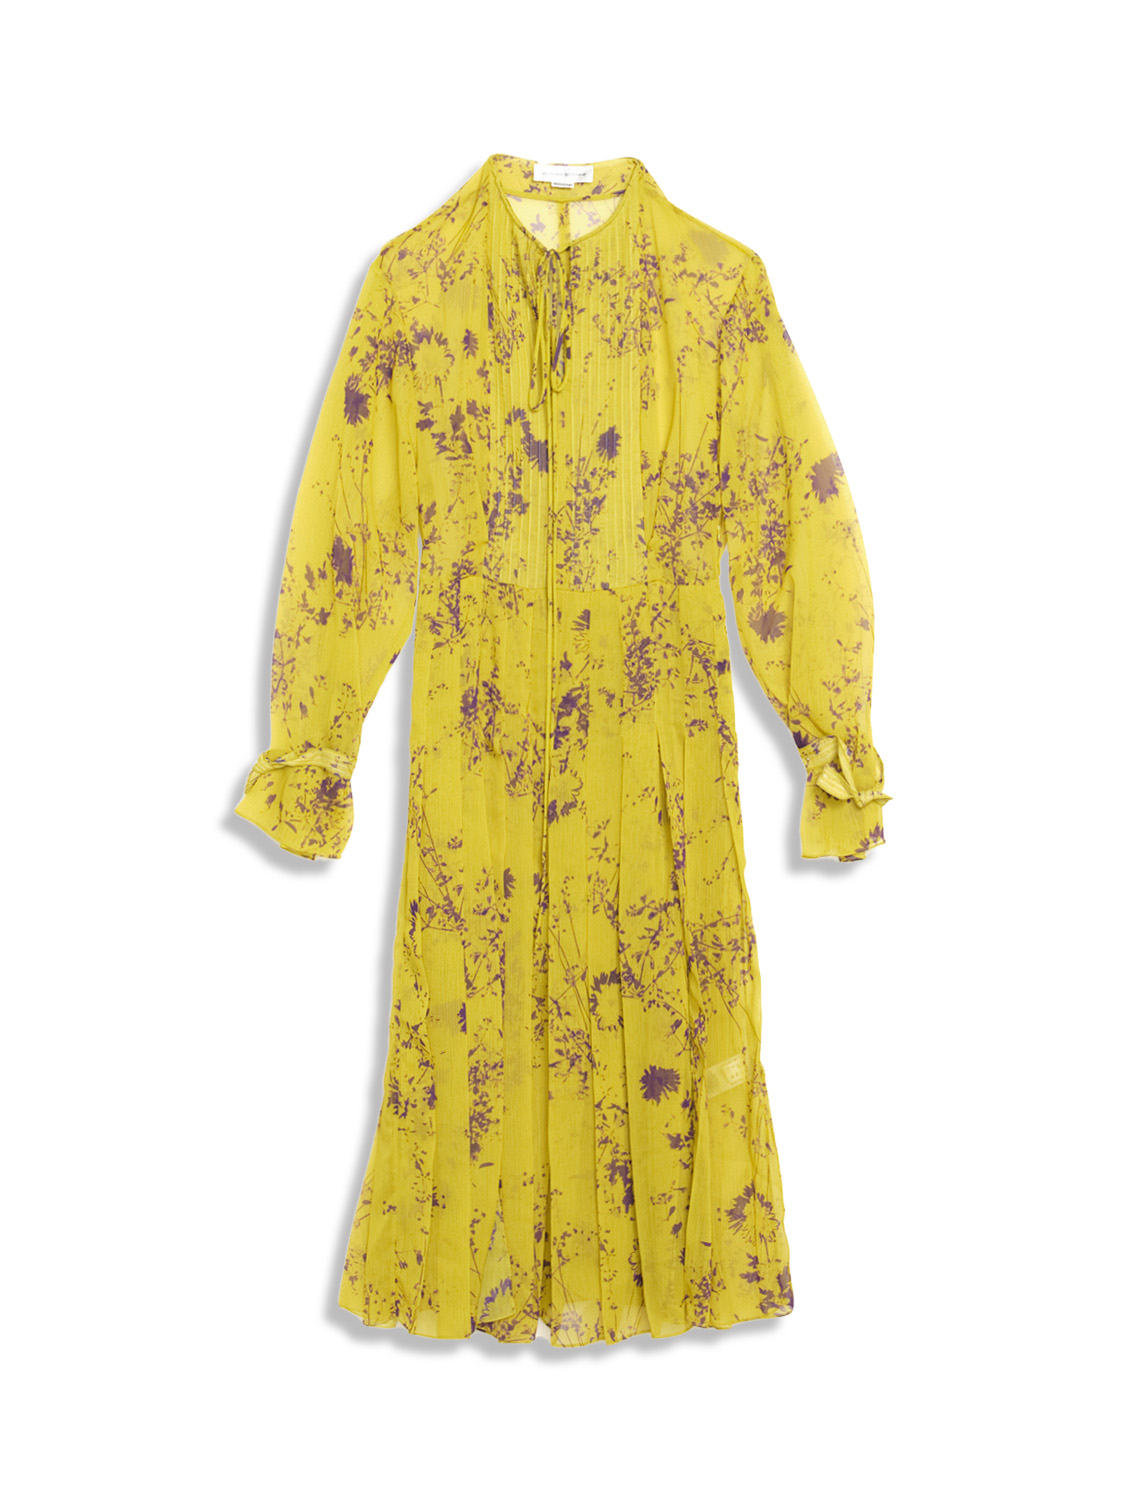 Victoria Beckham Pleated Tea Dress - Midi dress with floral print design green 38